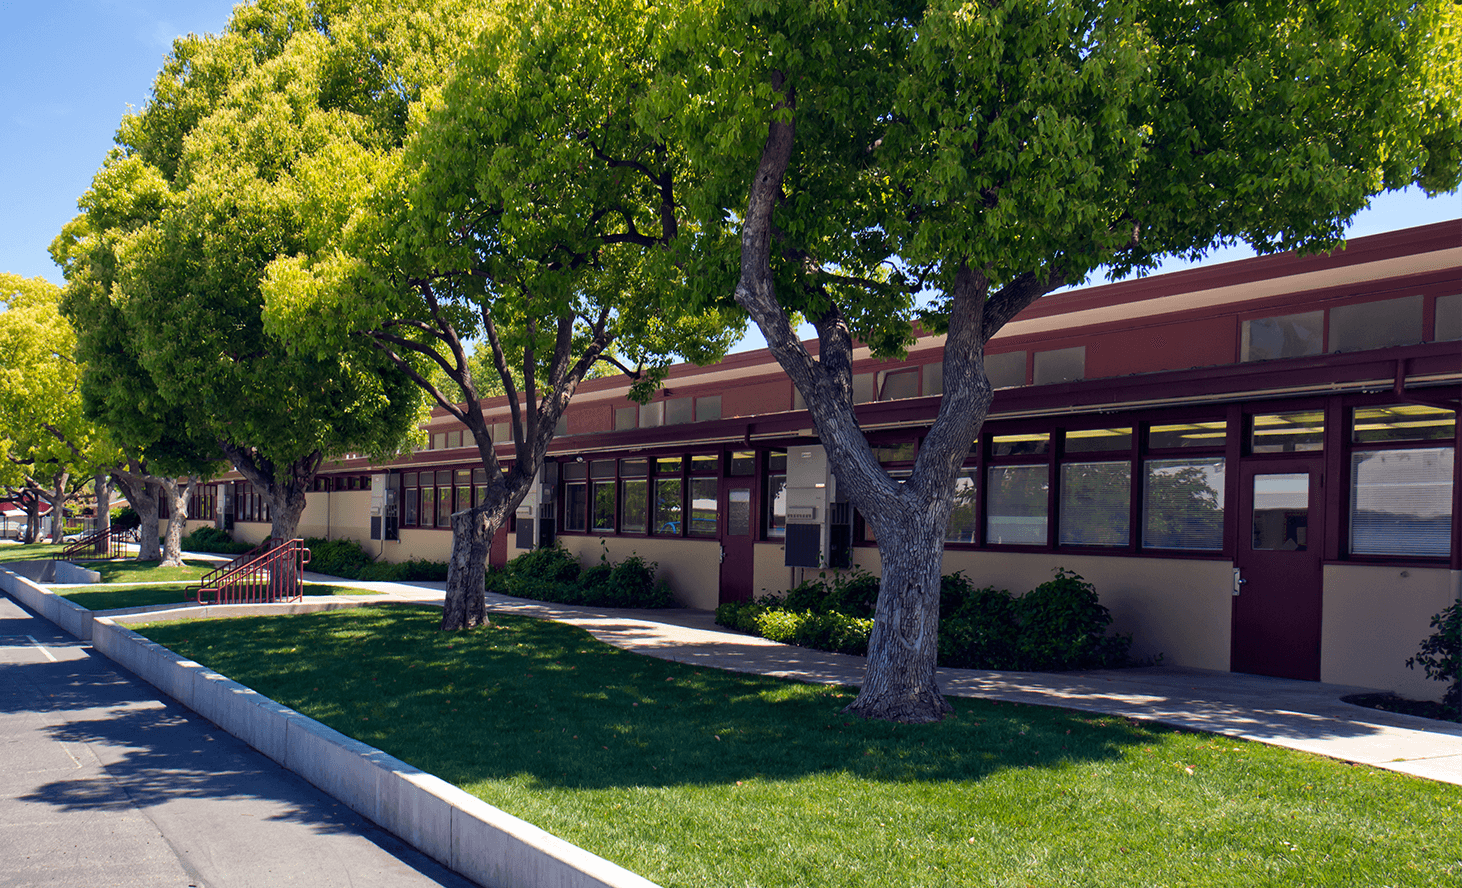 Campus Parking Lot | Challenger School - Strawberry Park | Private School In San Jose, California